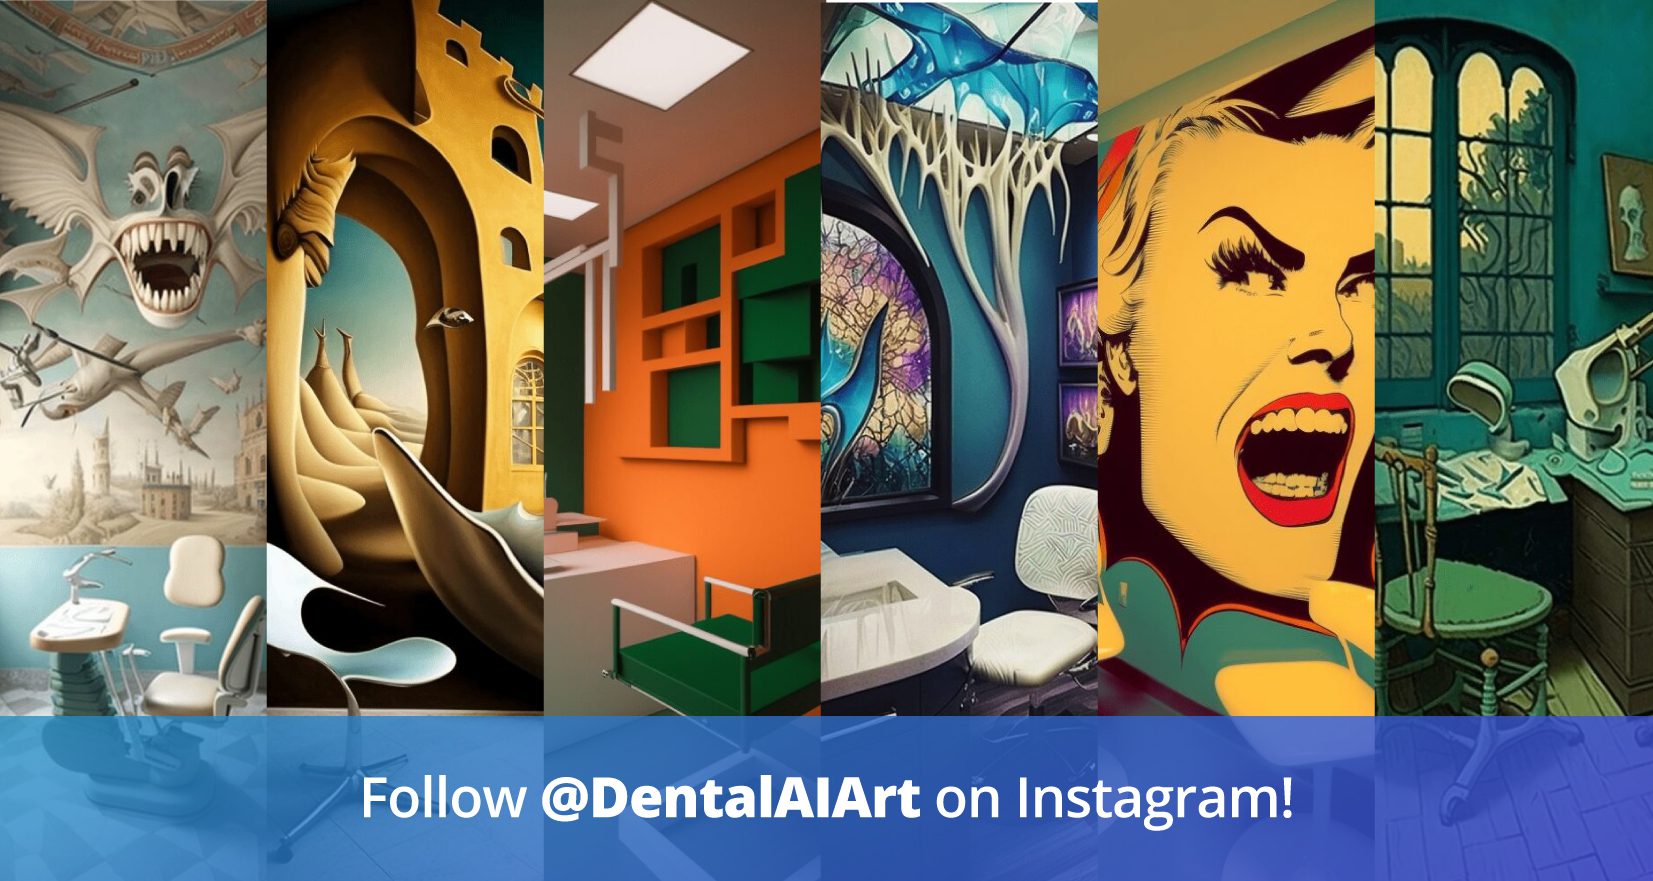 My Social Practice - Social Media Marketing for Dental & Dental Specialty Practices - dental office designs